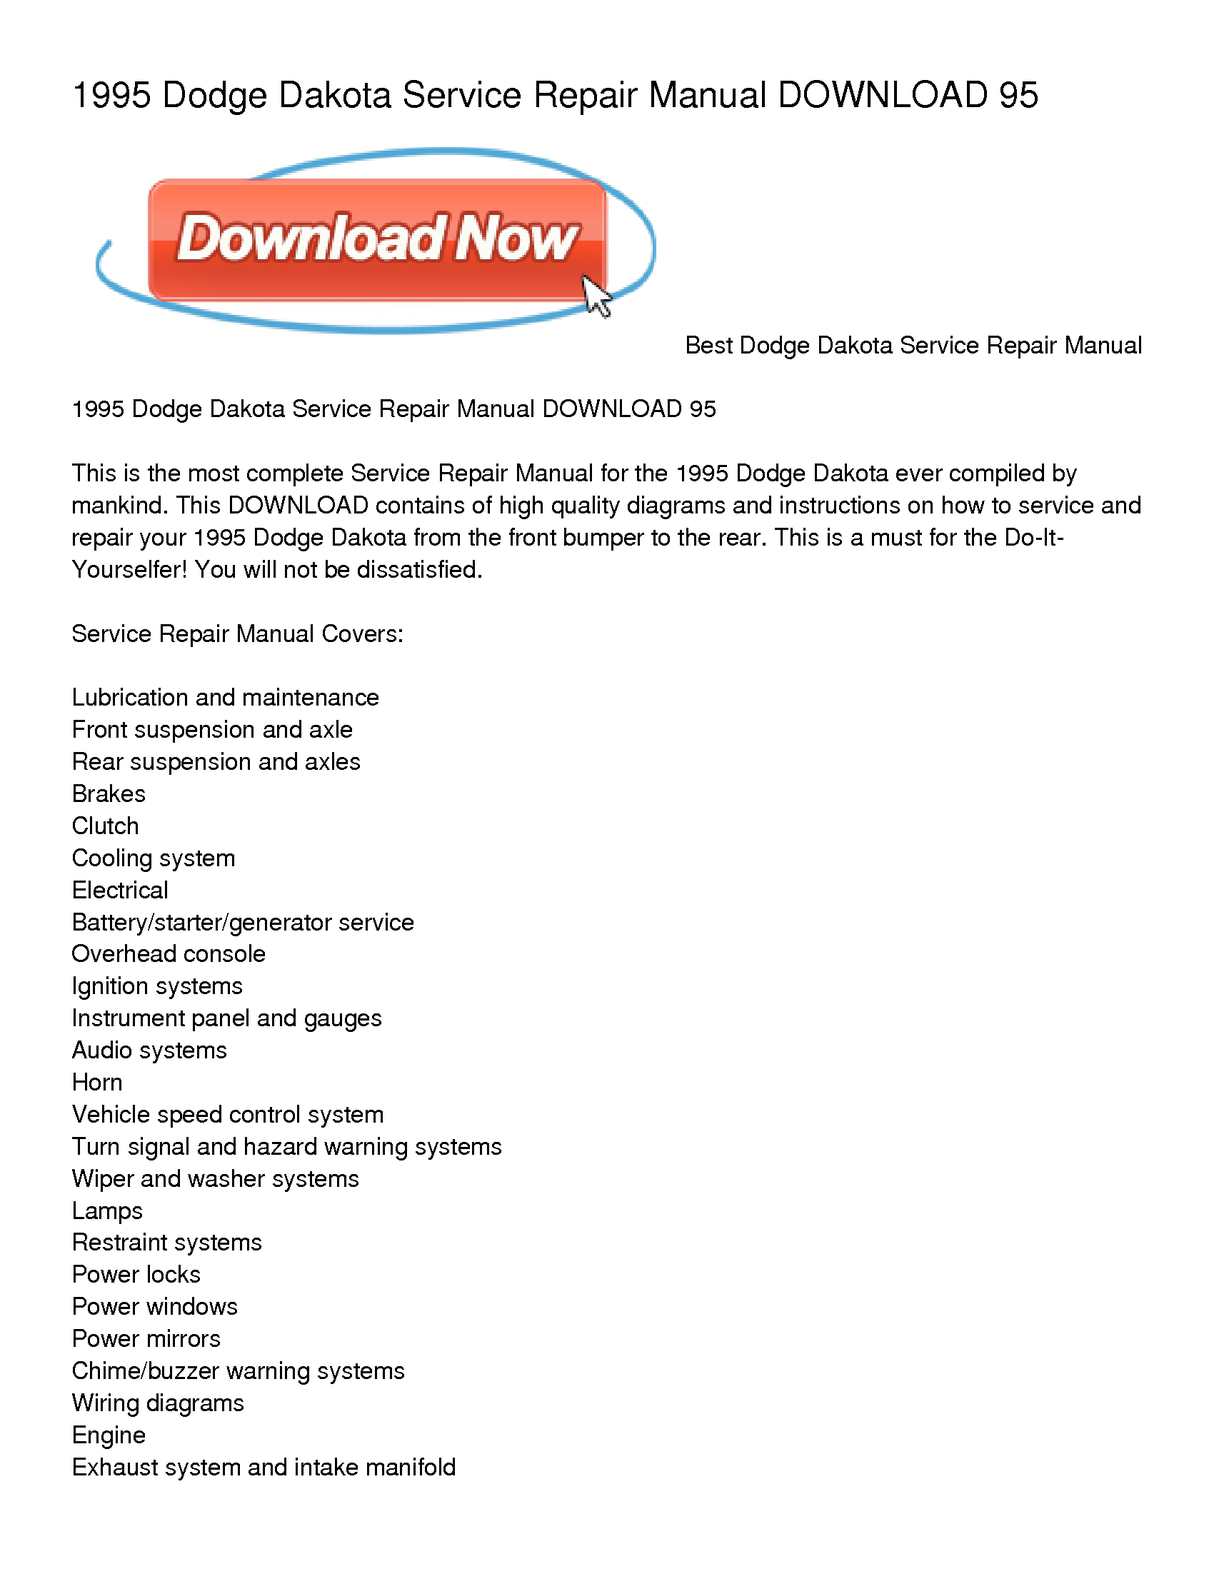 free chilton repair manuals pdf